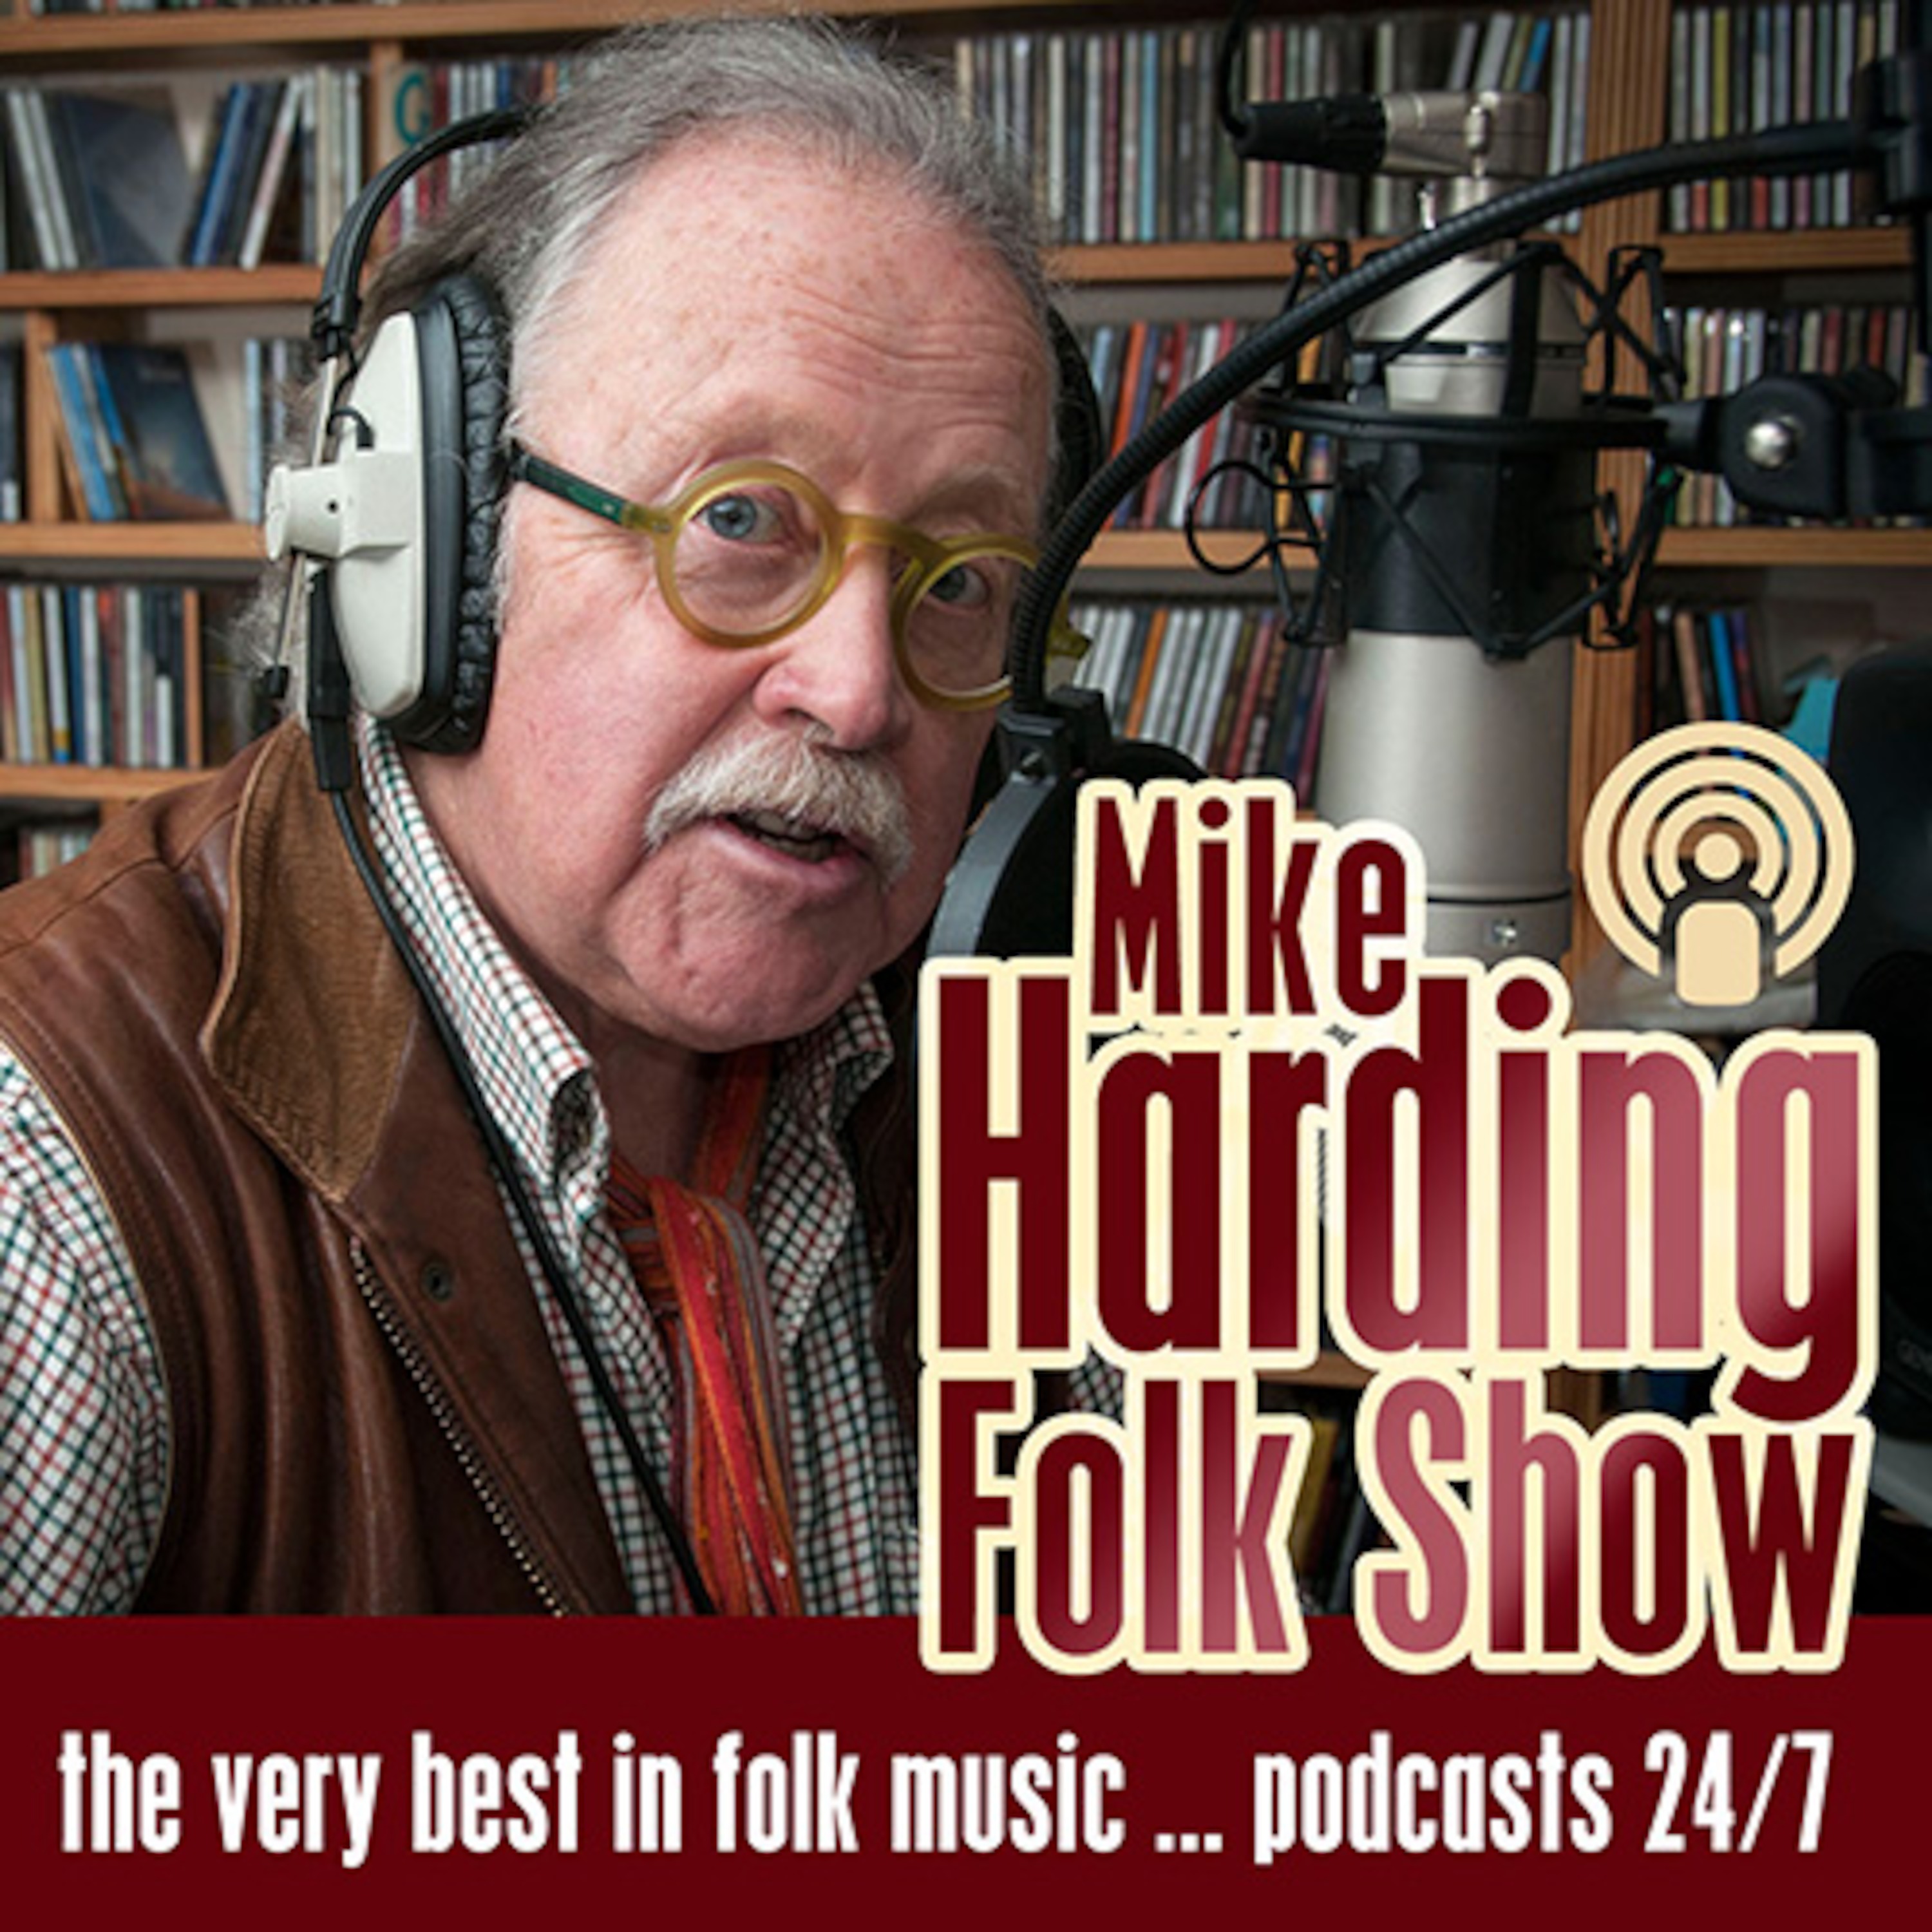 Mike Harding Folk Show 225